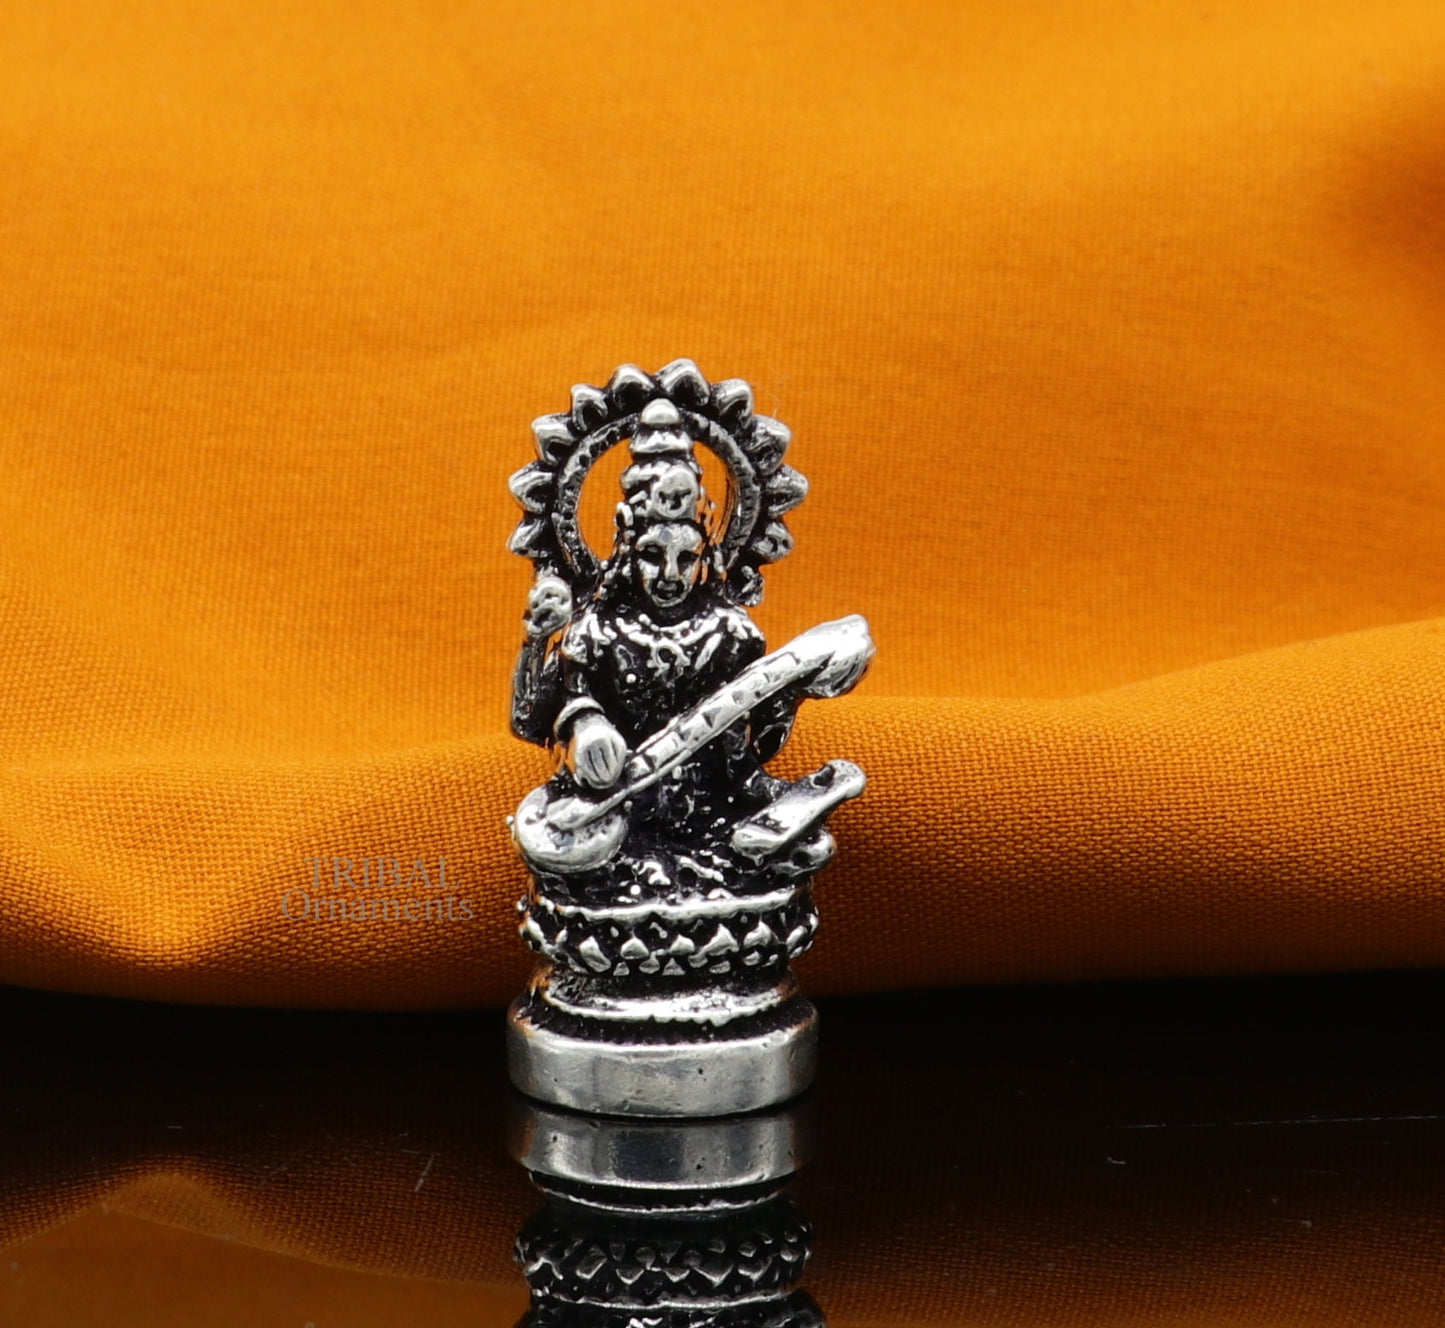 Divine goddess Sarashwati small 925 sterling silver solid article statue figurine, best home temple or car god sculpture  art514 - TRIBAL ORNAMENTS